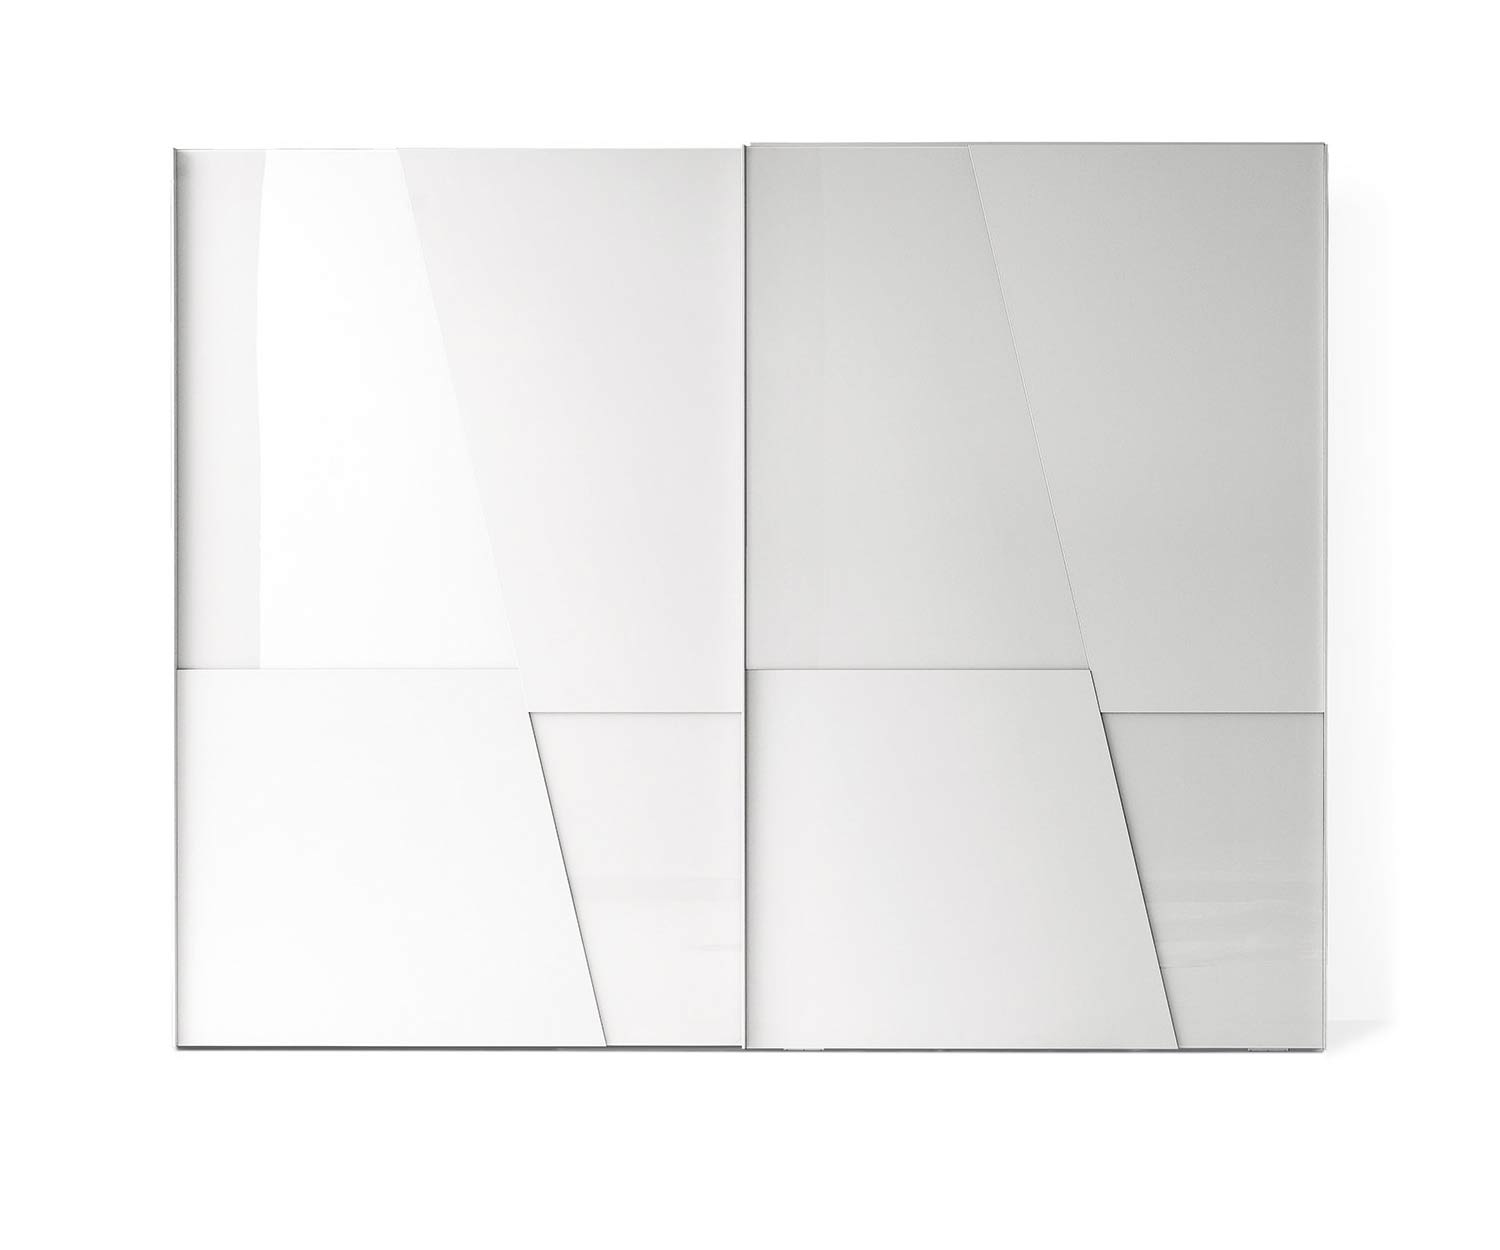 Exclusieve Livitalia design kledingkast Diagonal in wit hoogglans mat